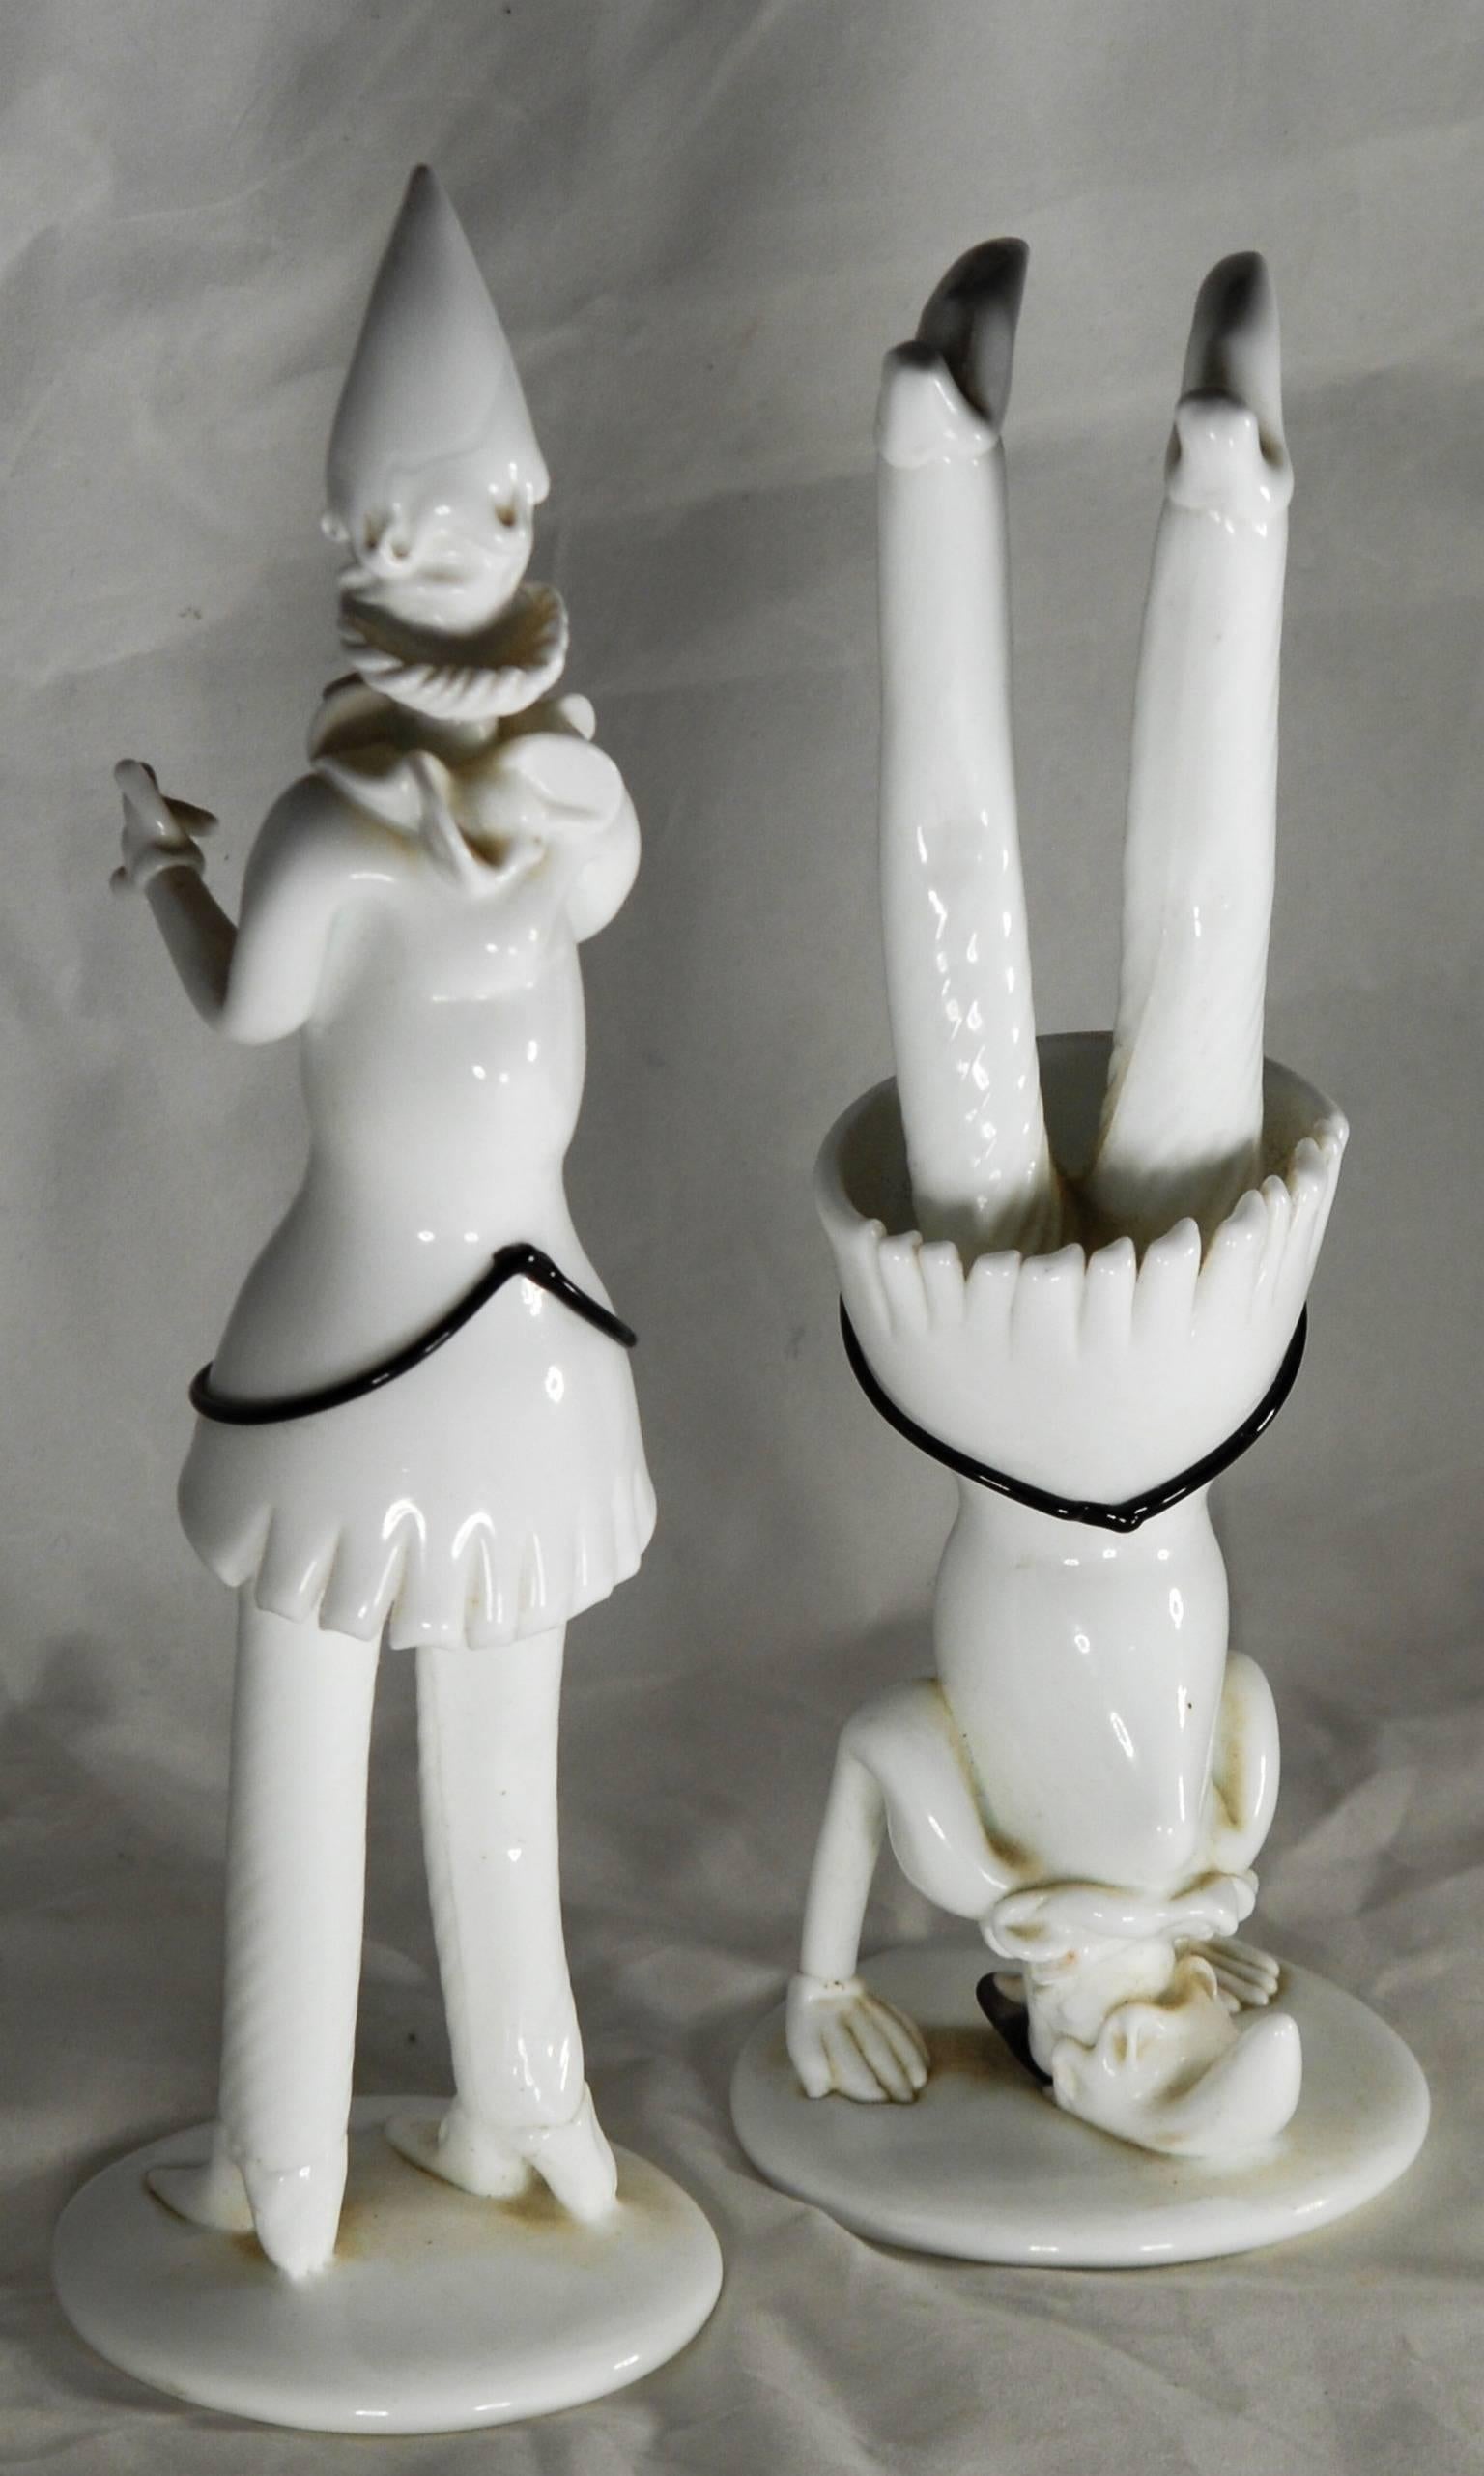 Hand-Crafted Fulvio Bianconi, Two Tiepoleschi Figurines, Pulcinella